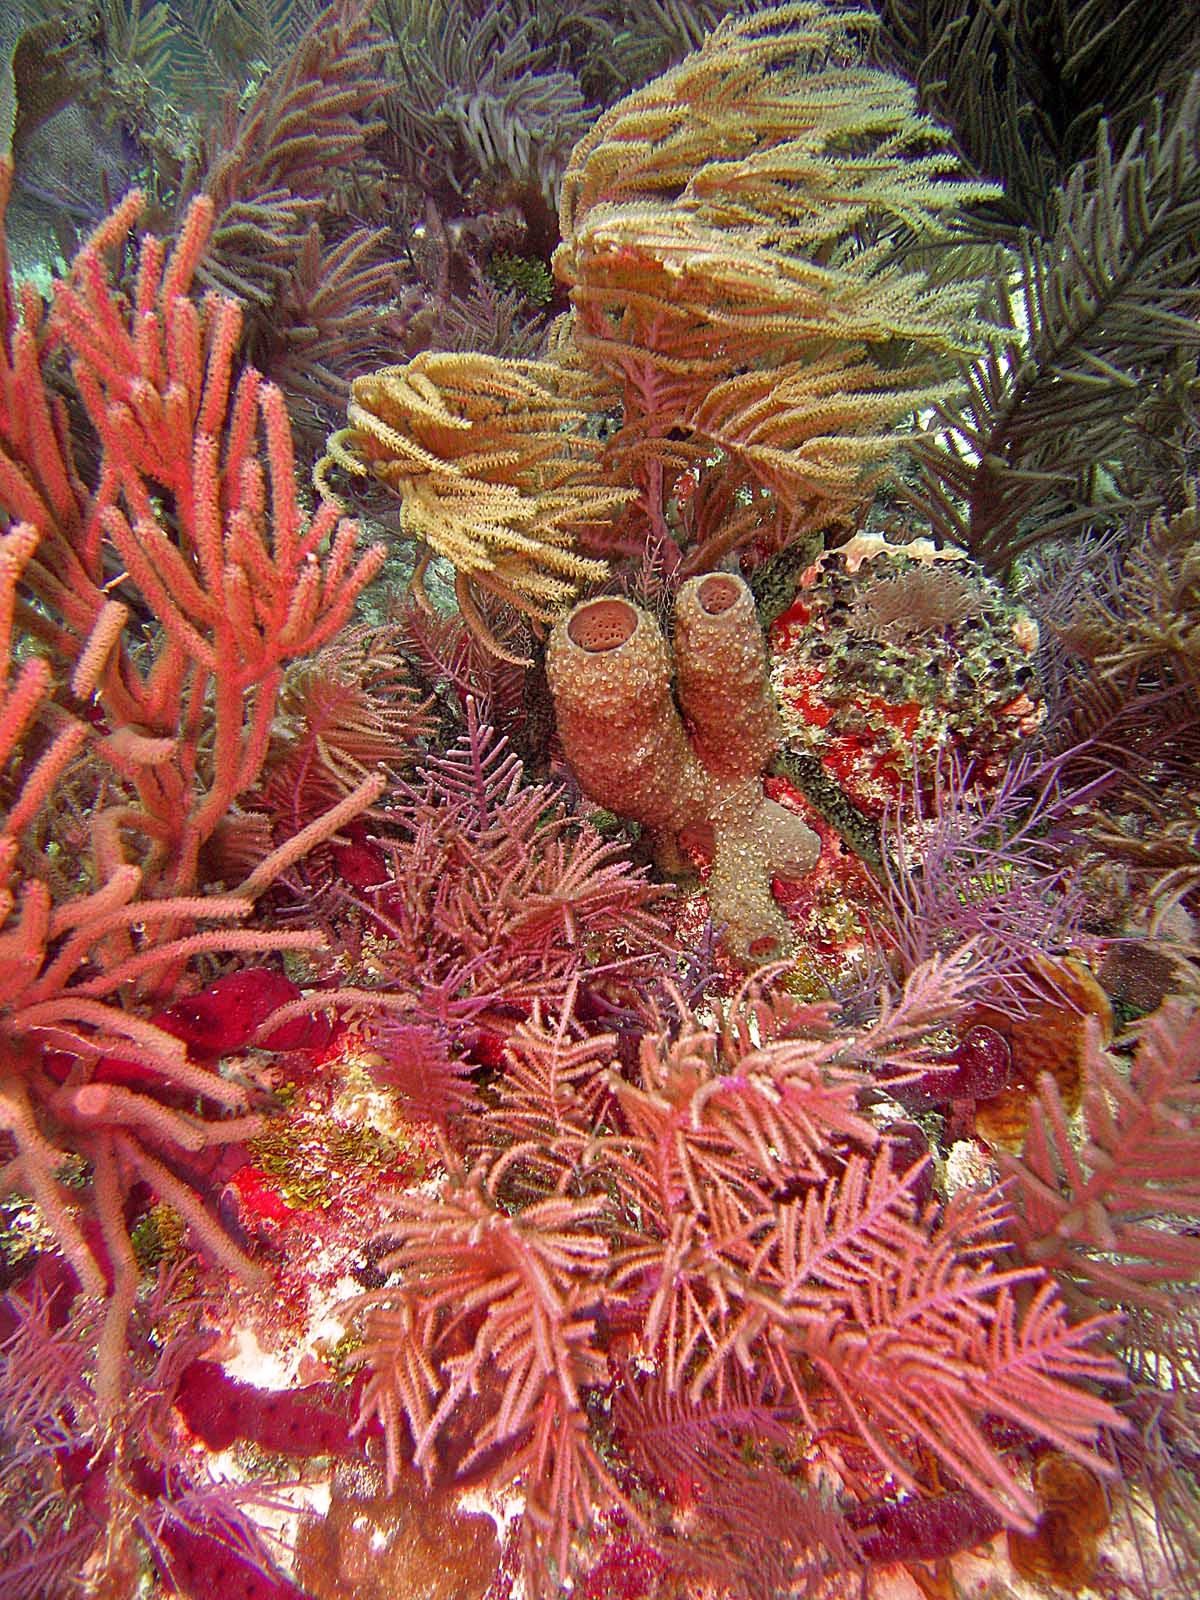 Corals at N DryRocks FL